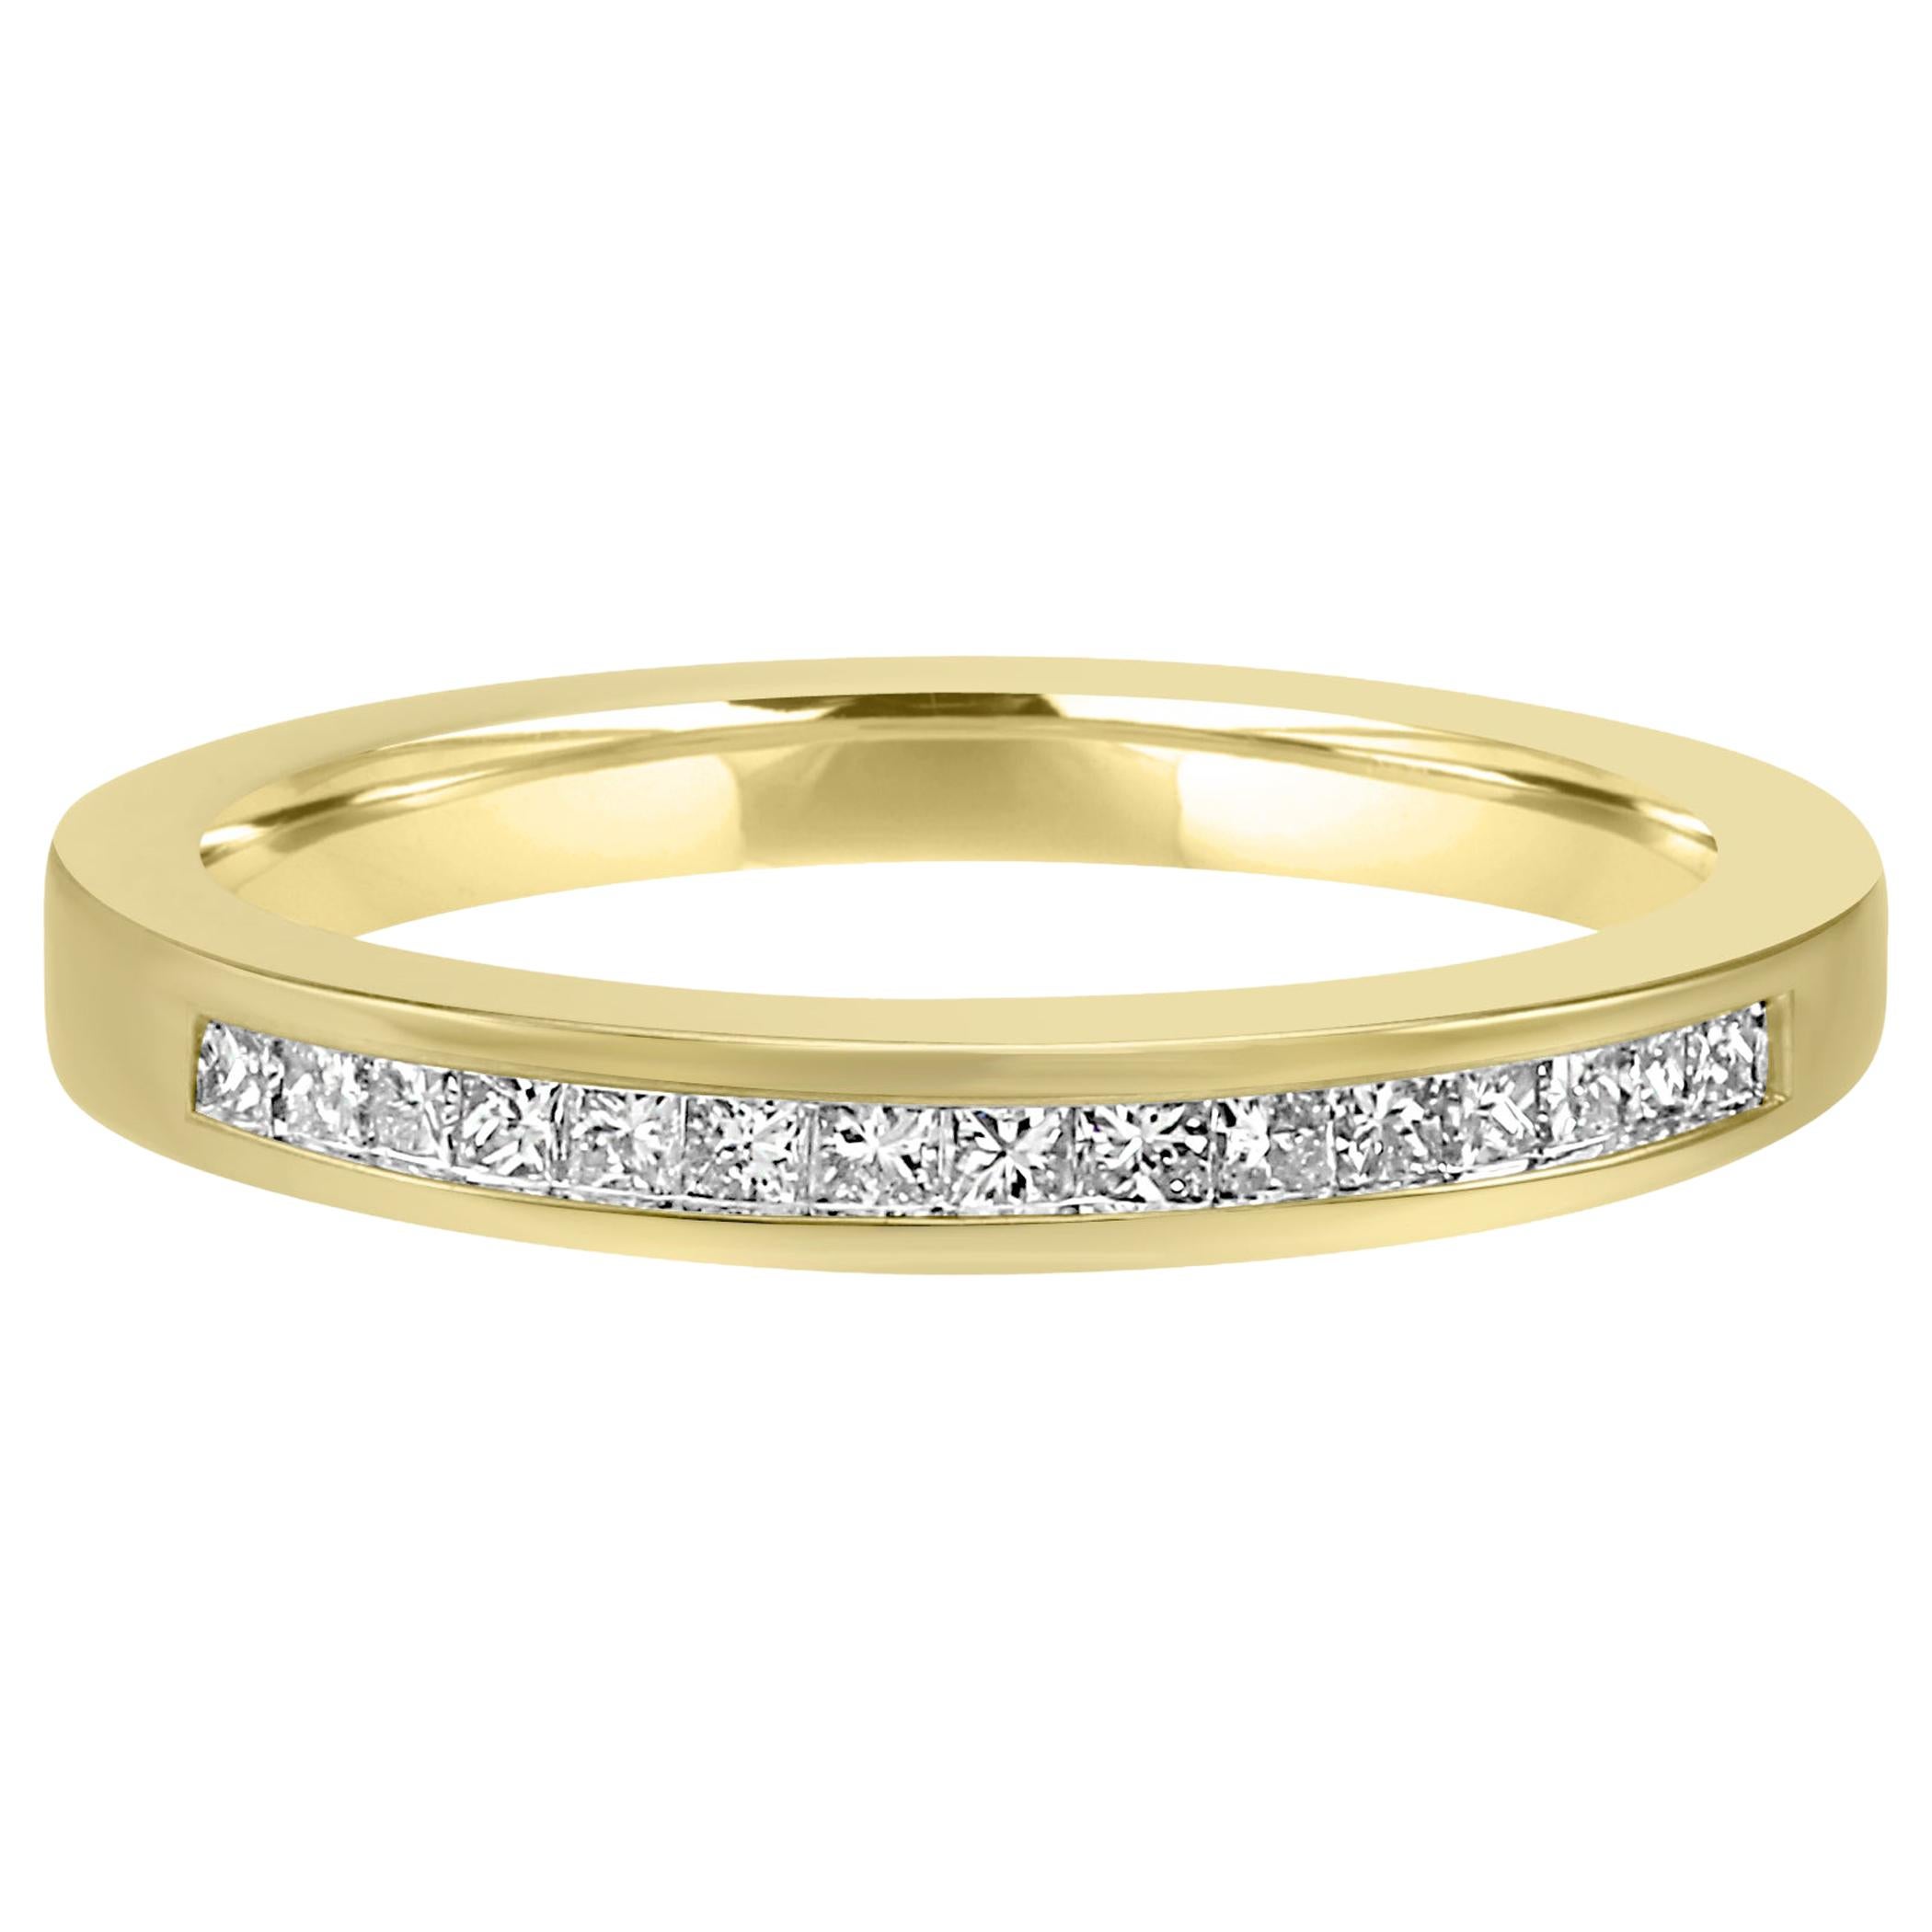 White Diamond Princess Cut Yellow Gold Channel Set Fashion Wedding Band Ring